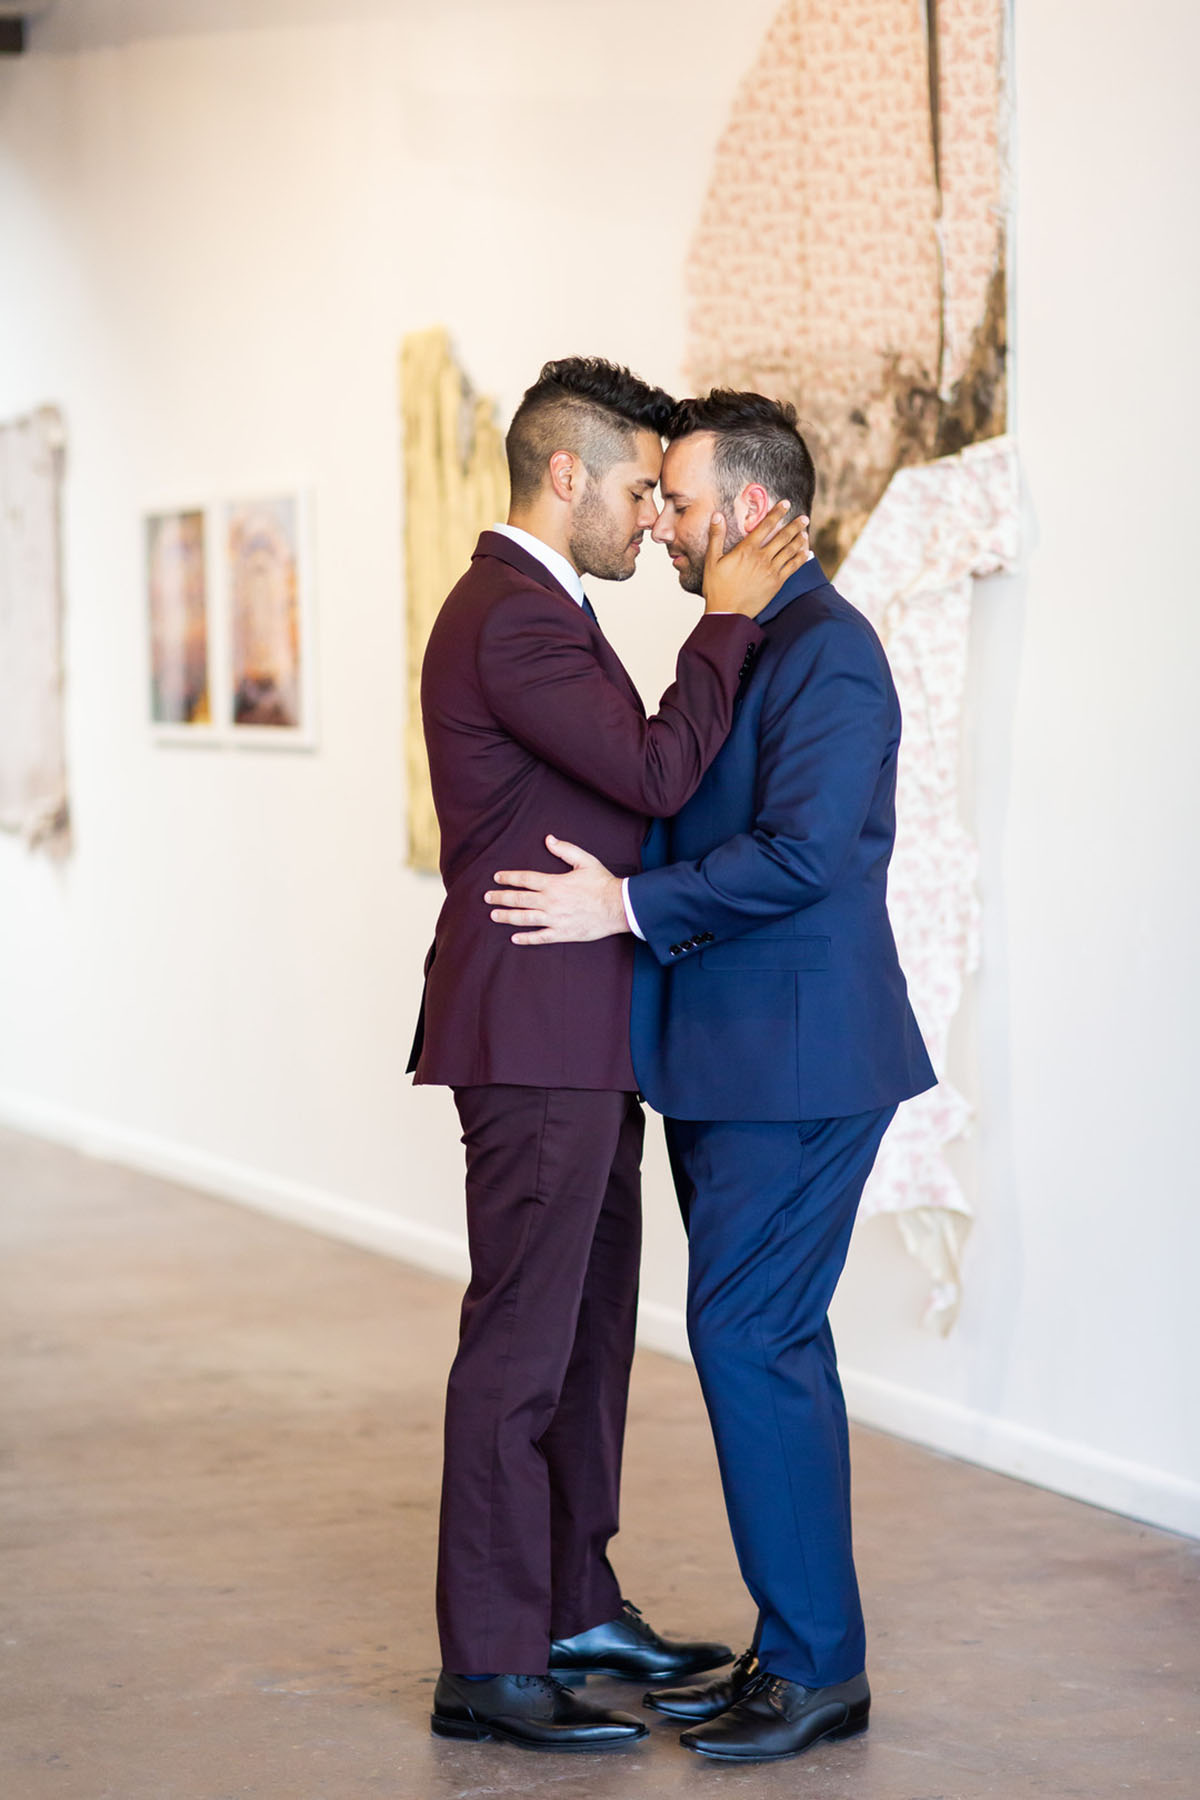 Fort Lauderdale gay dance studio owner wedding embrace